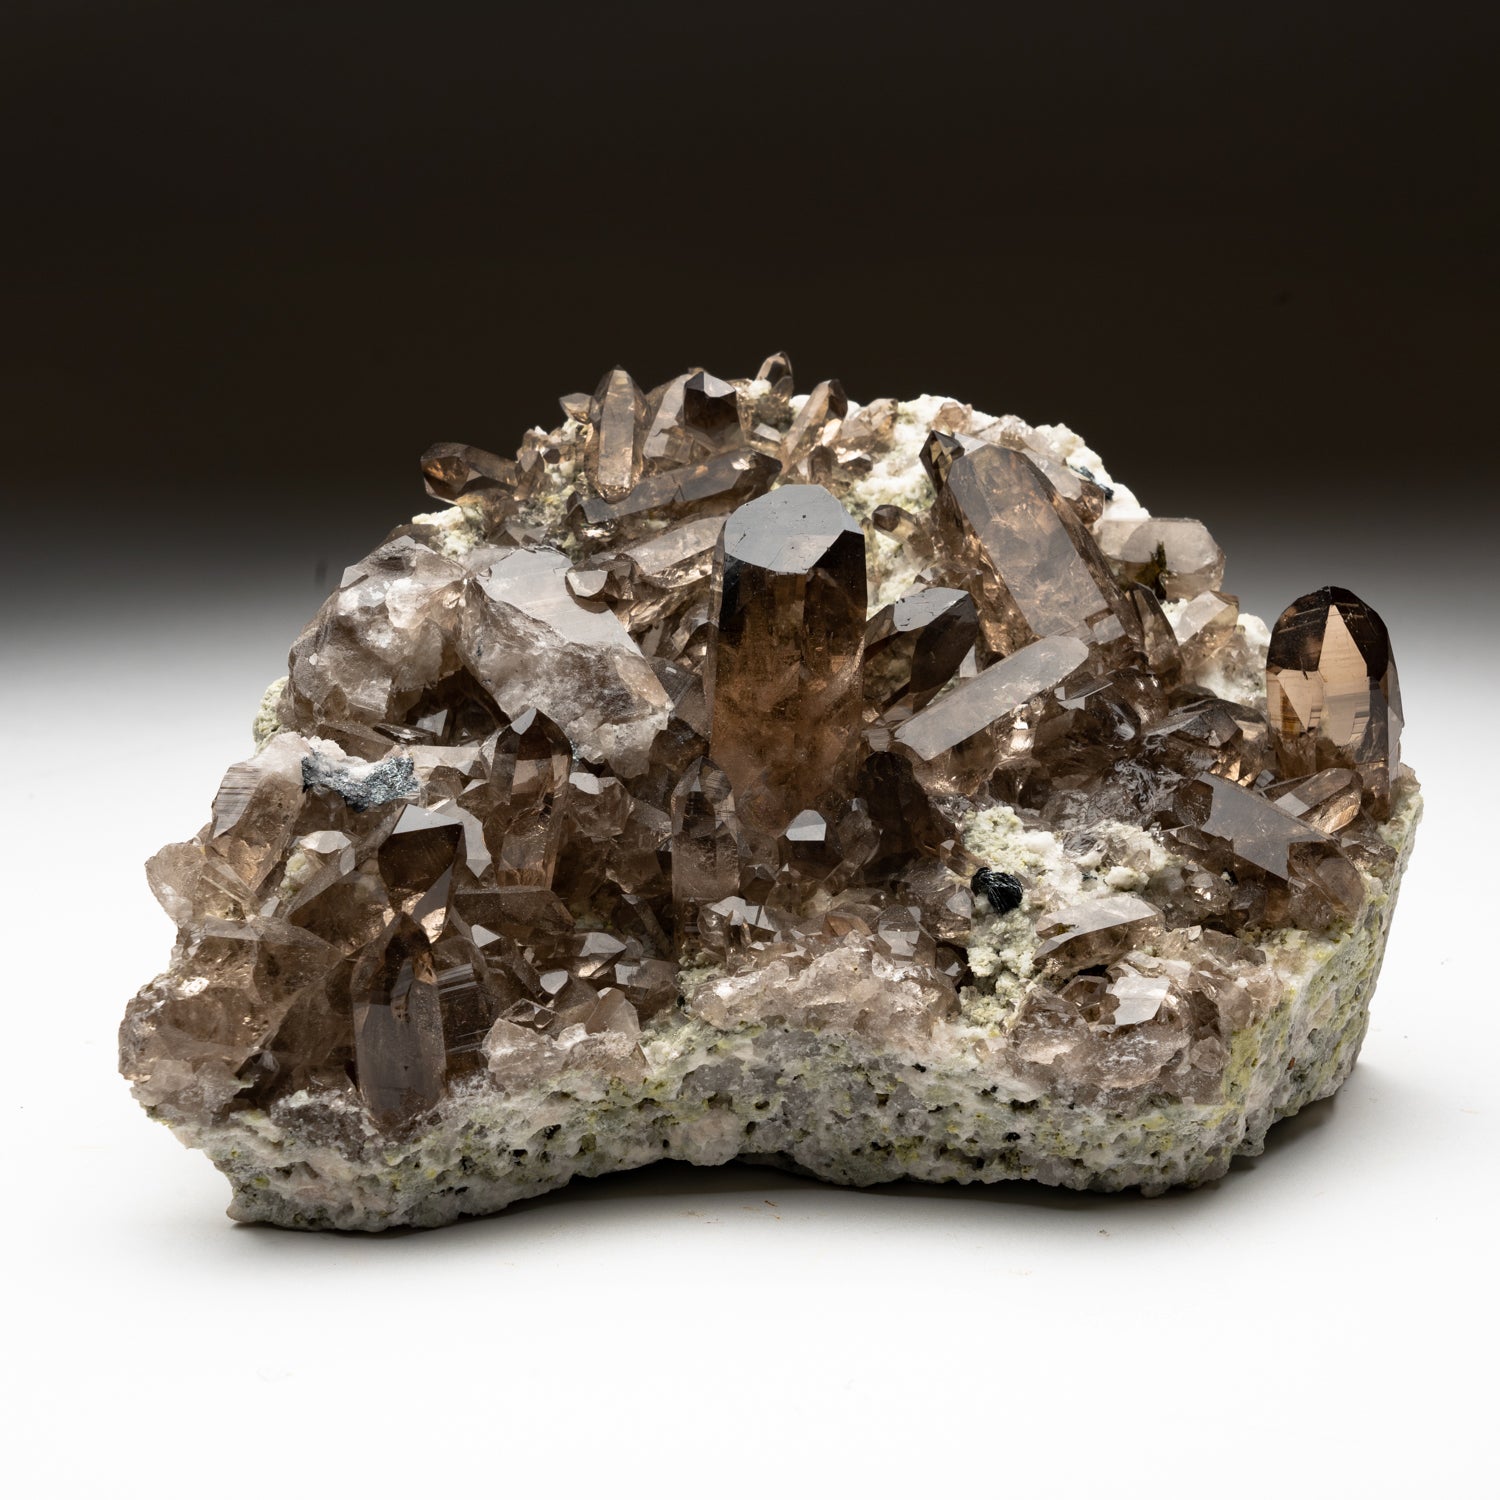 Smoky Quartz Crystals from St. Gotthard, Kanton Uri, Switzerland